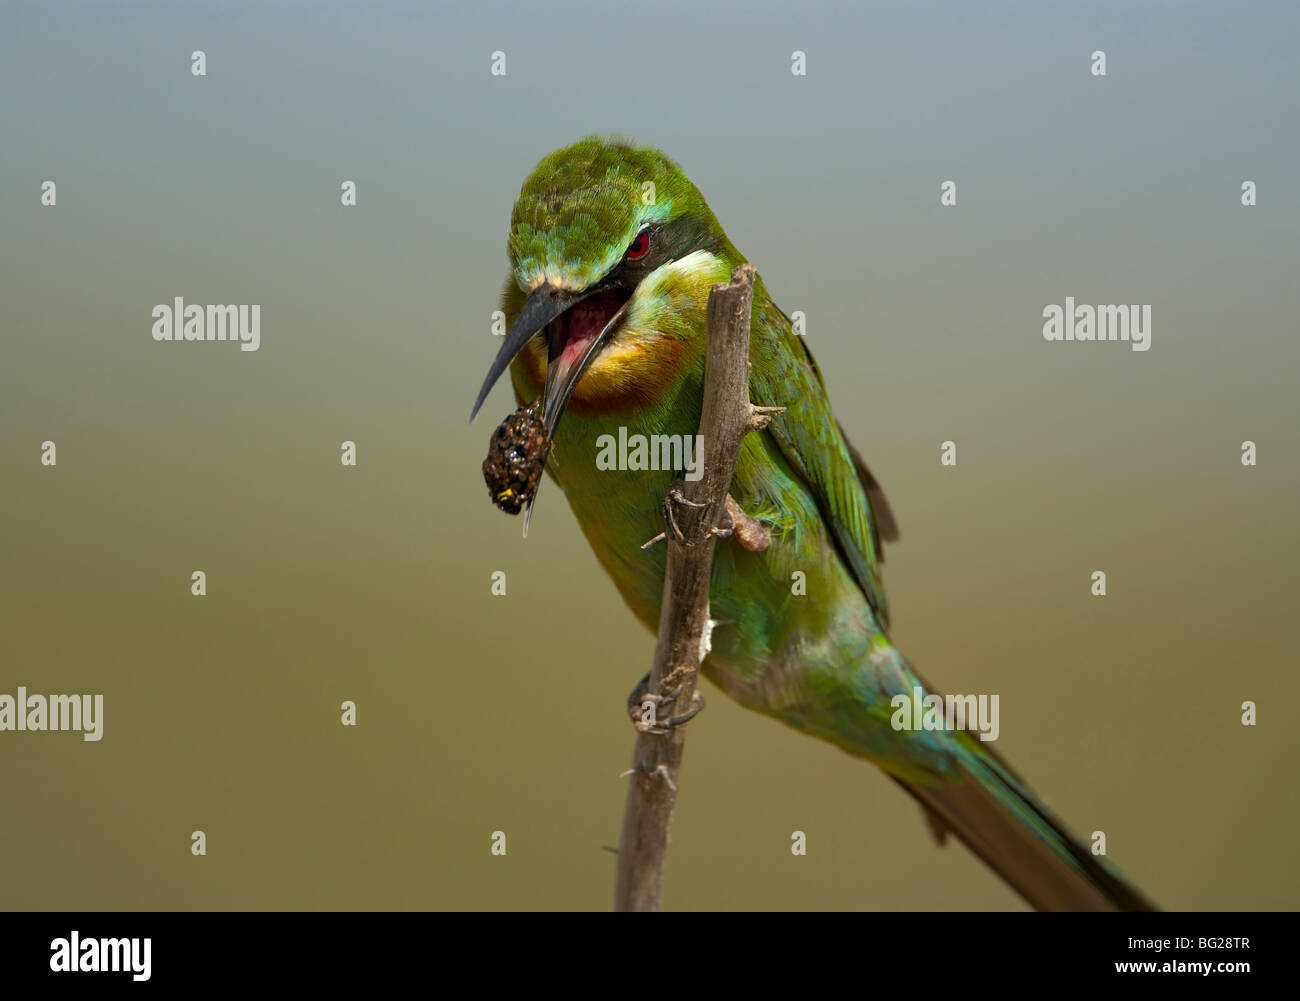 Worm in mouth fotografías e imágenes de alta resolución - Alamy